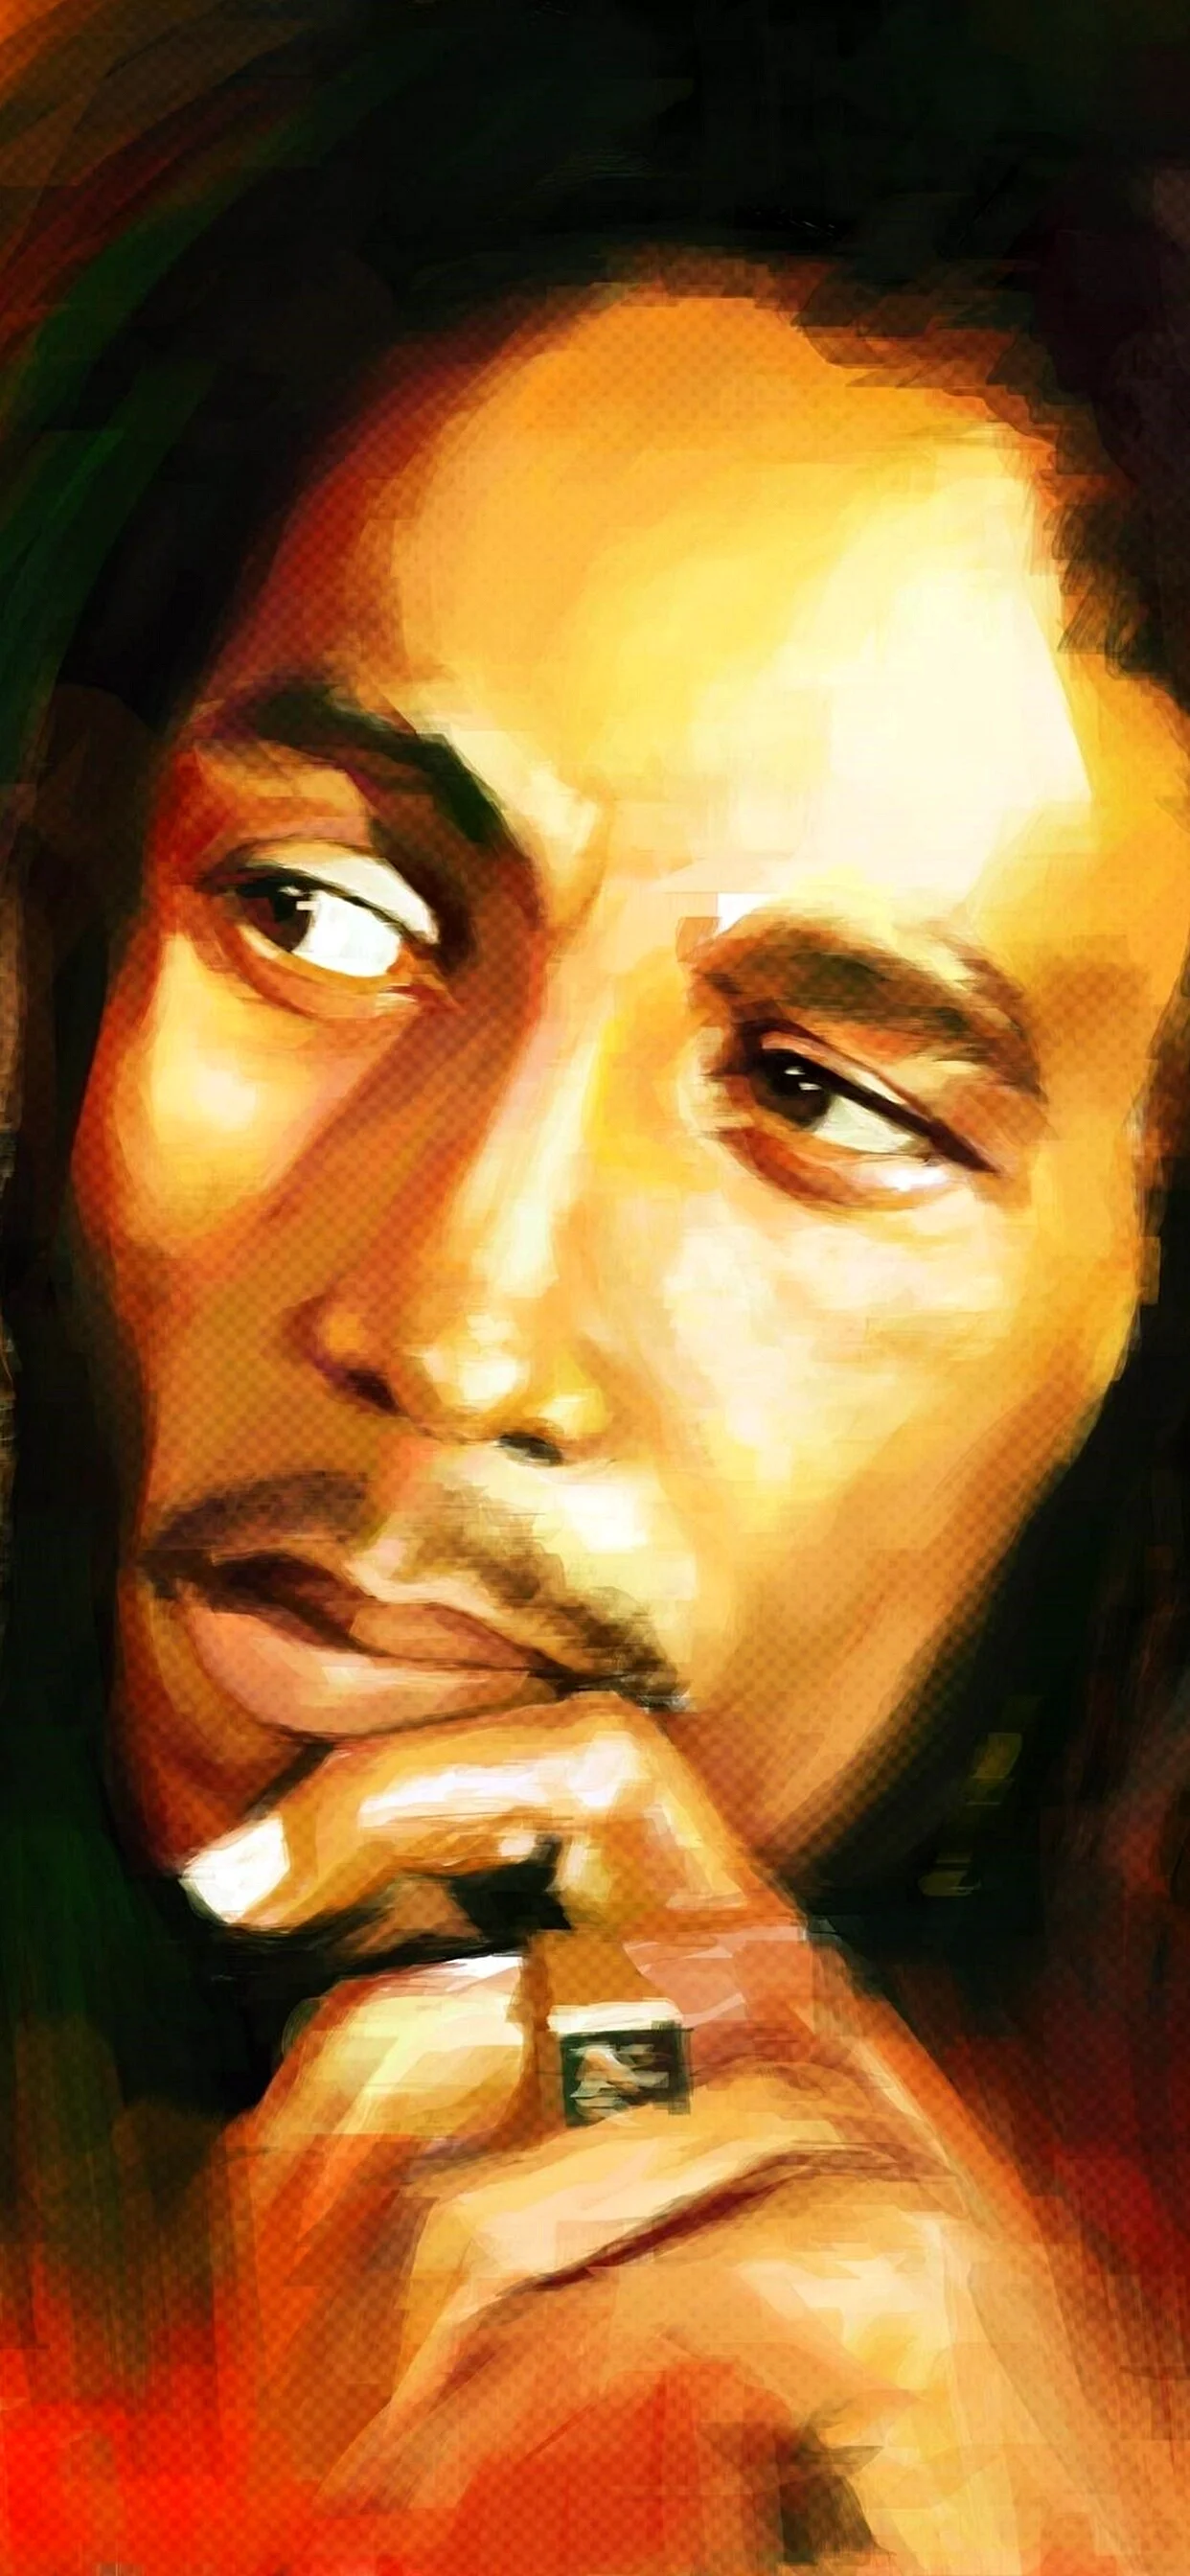 Bob Marley Wallpaper for iPhone 11 Pro Max